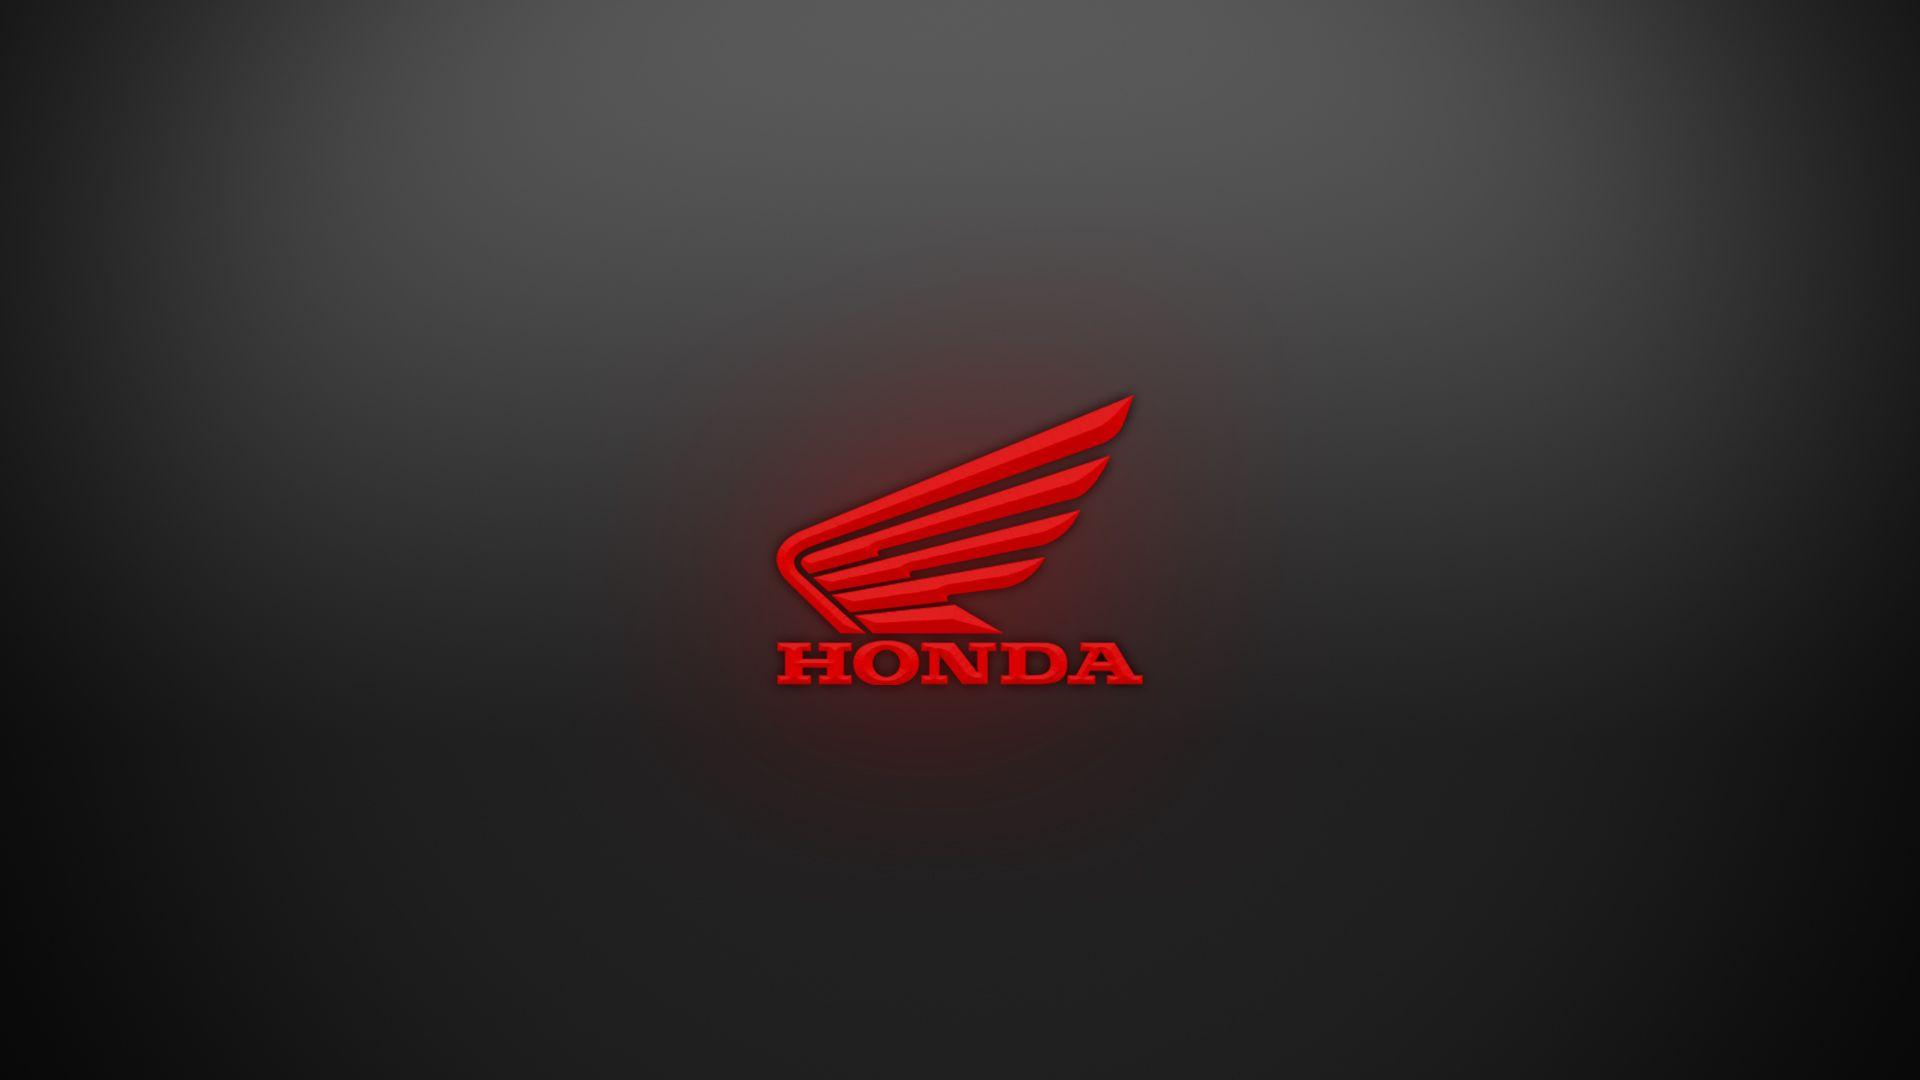 Honda Full HD Background / 1920x1080. Honda, Logo wallpaper hd, HD wallpaper